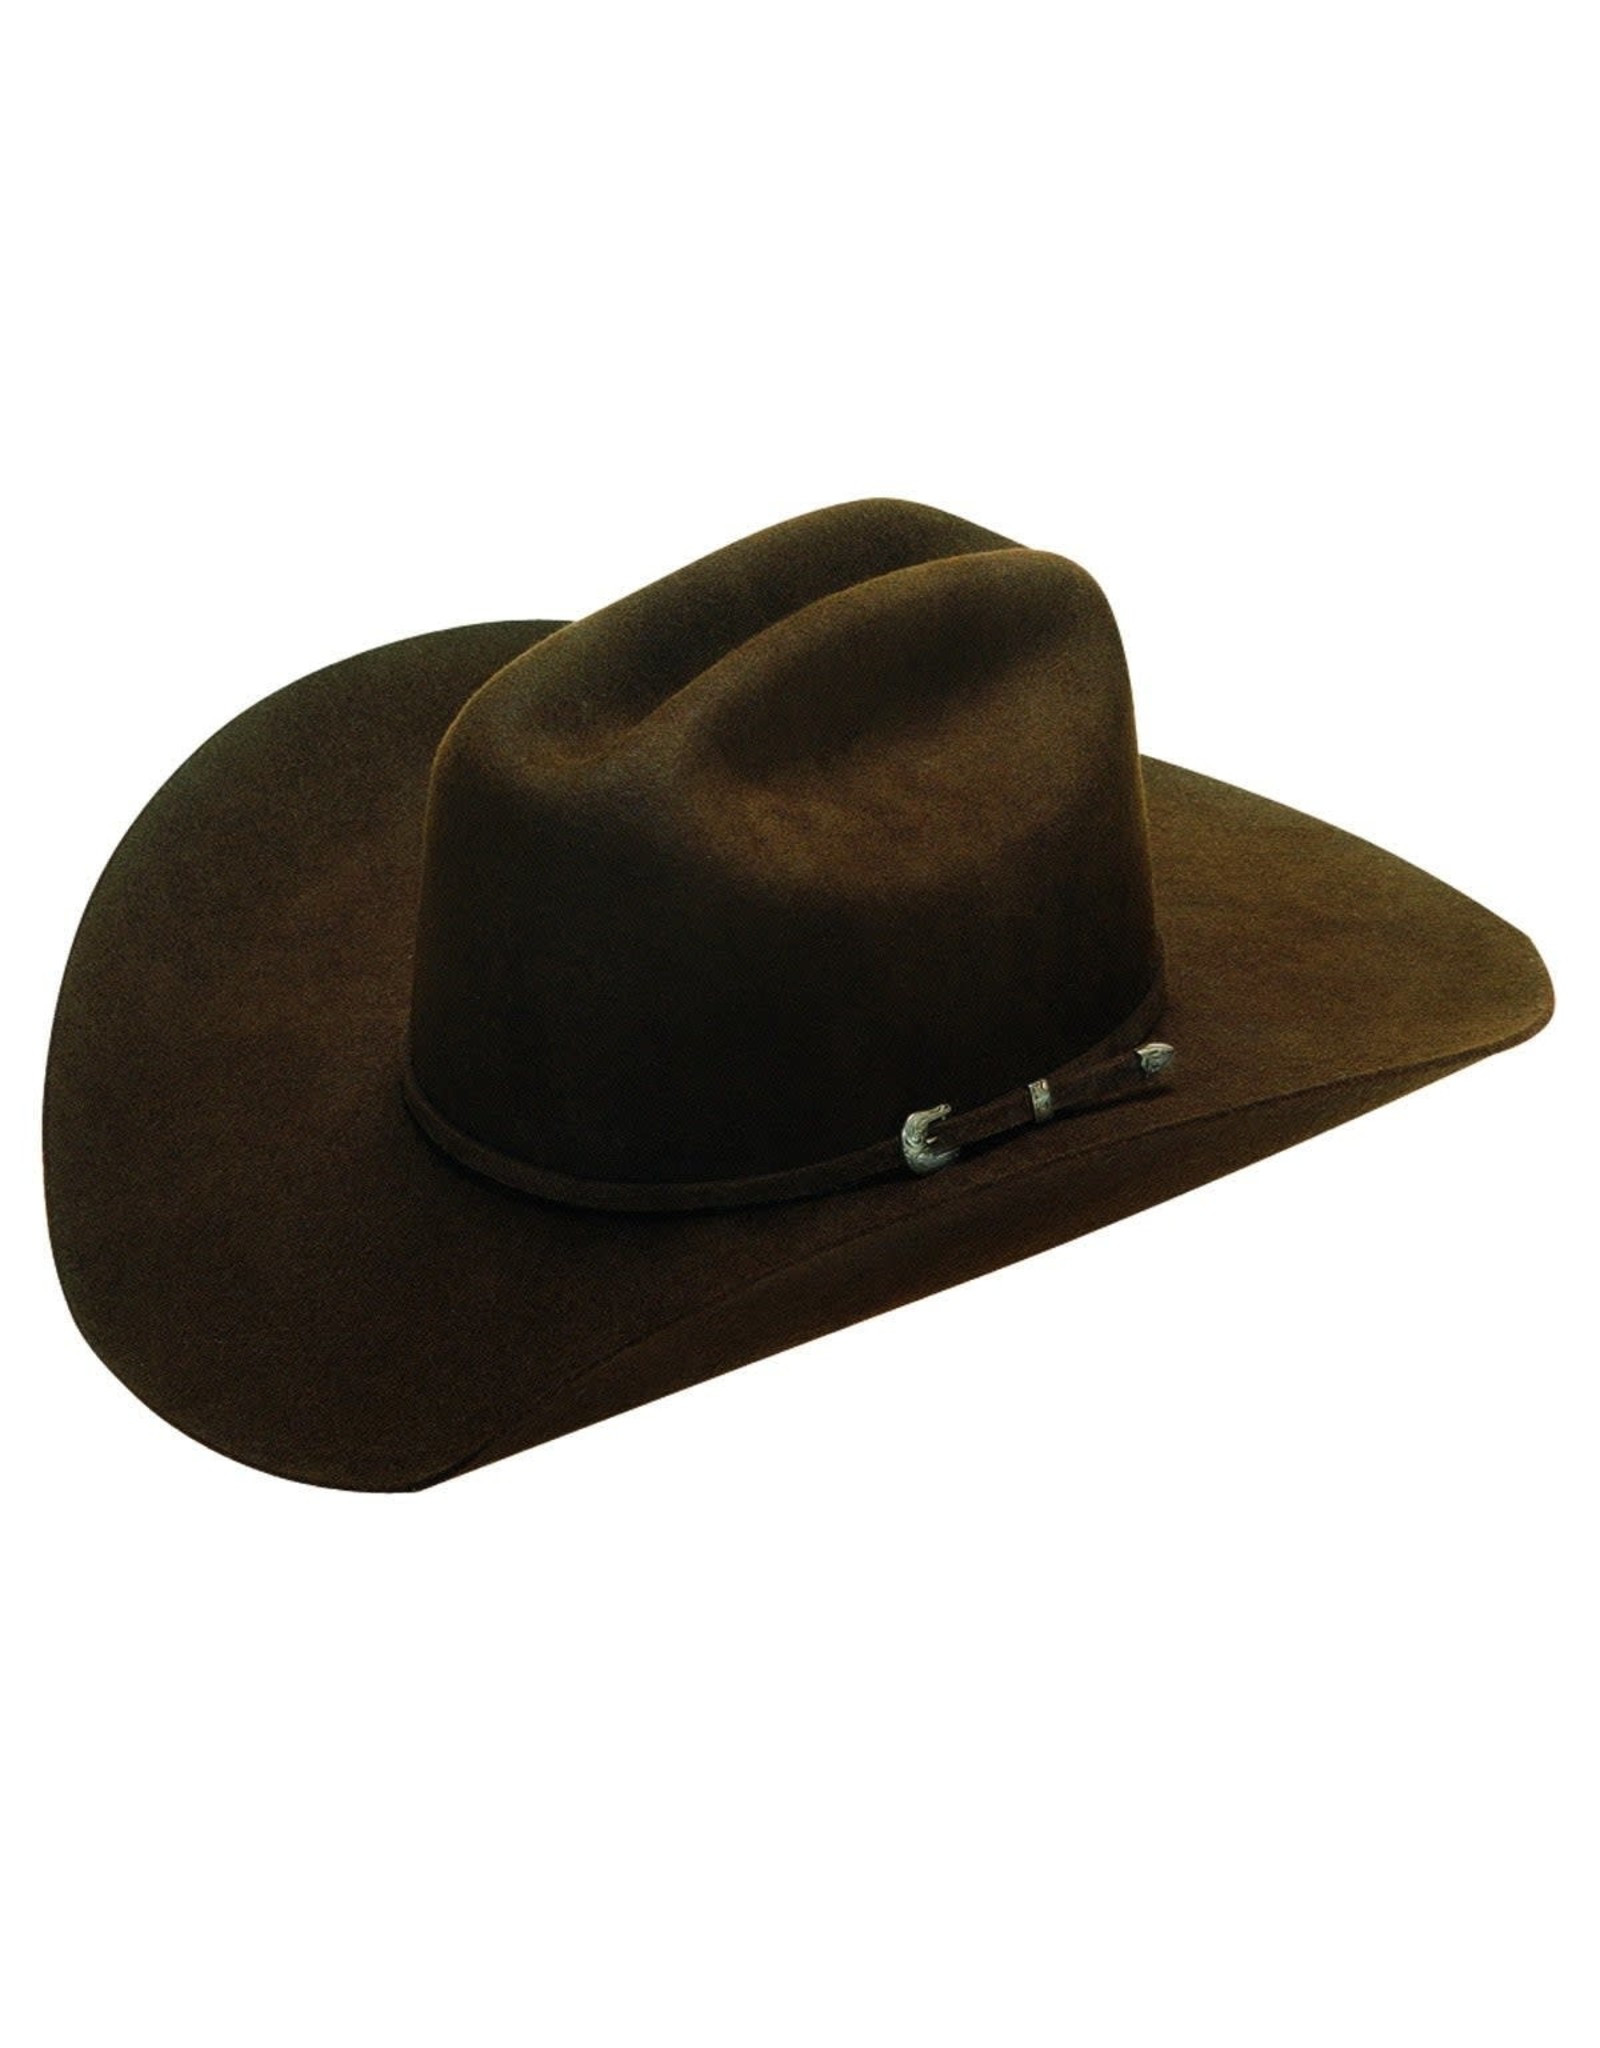 Twister Dallas T7101047 Brown Wool/Felt Cowboy Hat